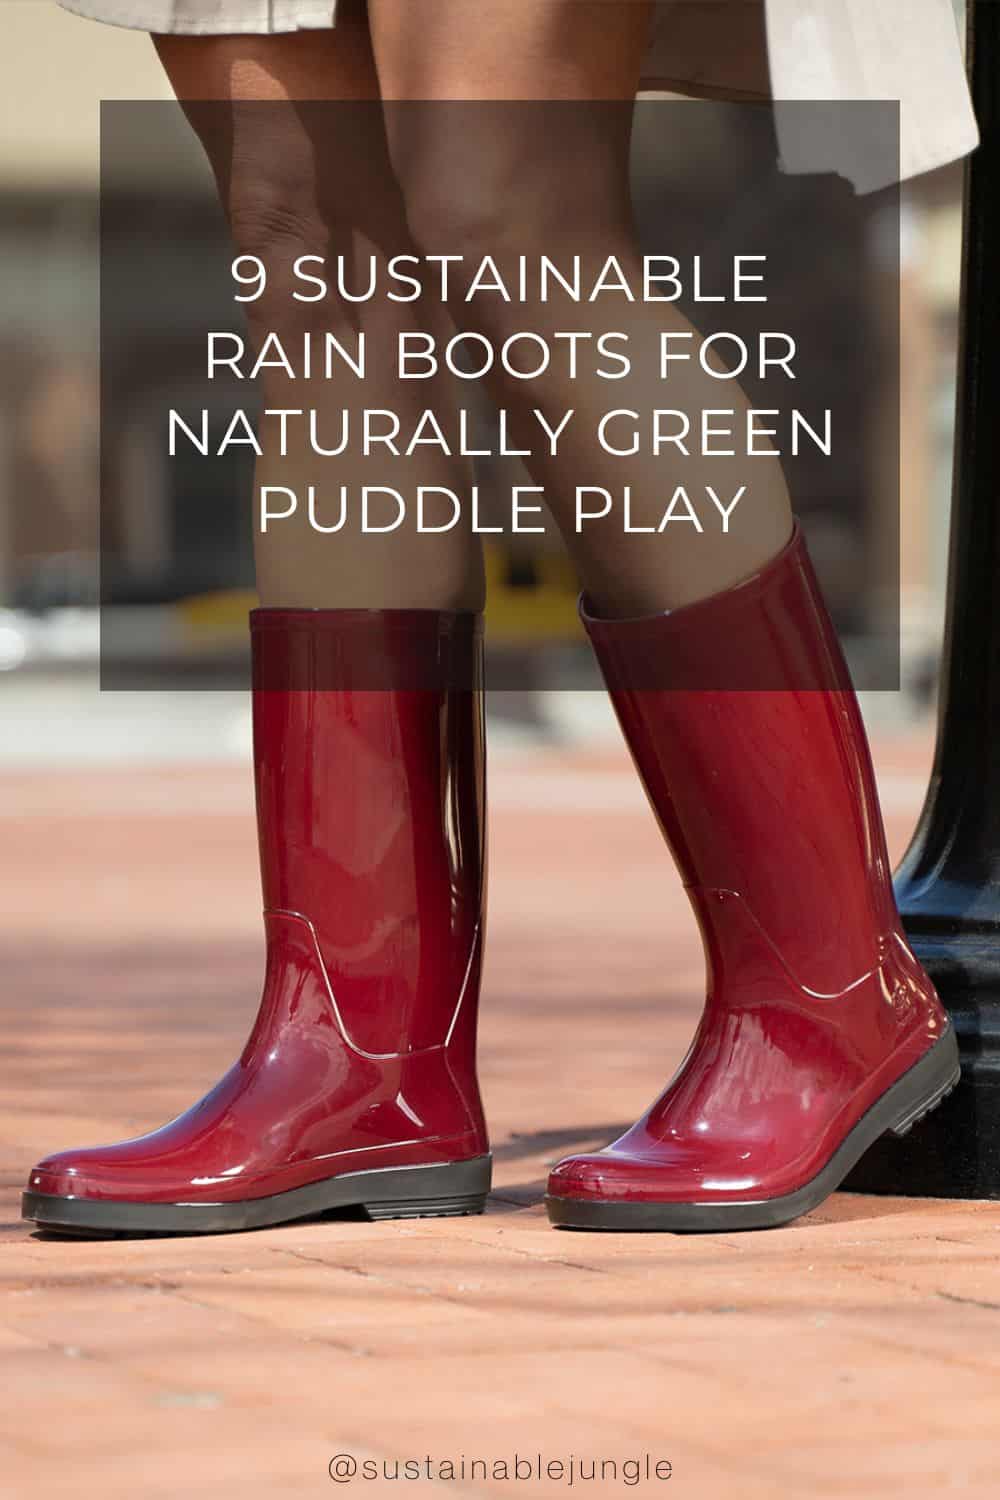 9 Sustainable Rain Boots For Naturally Green Puddle Play Image by Kamik #sustainablerainboots #ecofriendlyrainboots #naturalrubberrainboots #recycledruuberboots #bestsustainablerainboots #veganrainboots #sustainablejungle